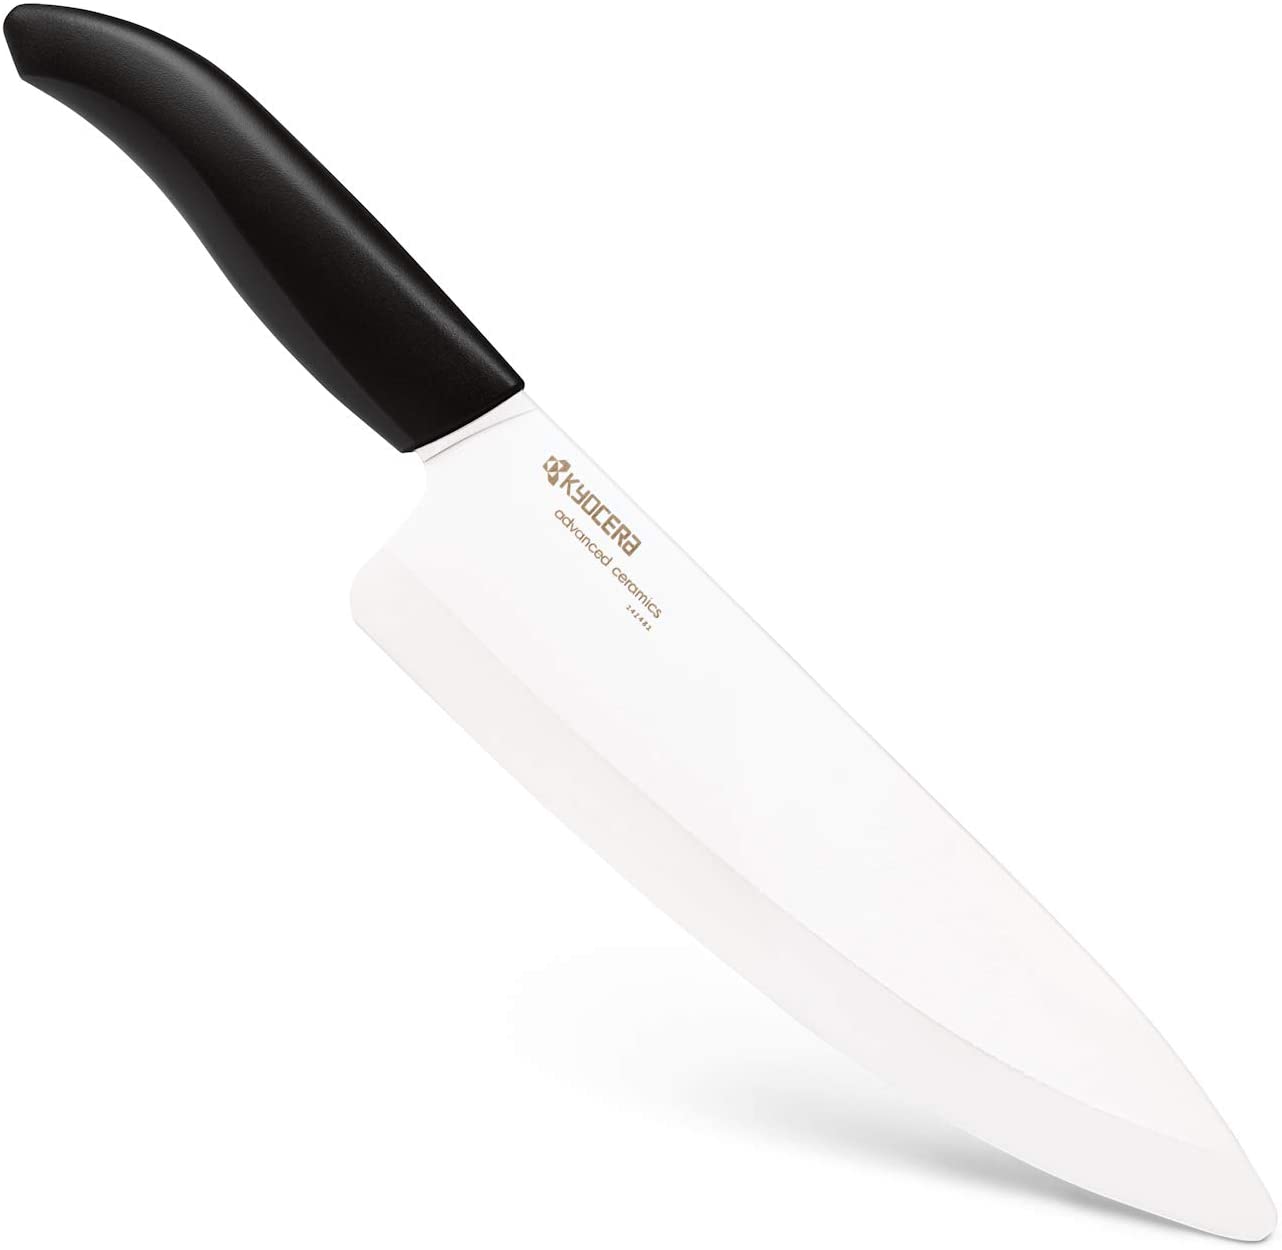 Kyocera Revolution 8″ Ceramic Chef’s Knife, 8-inch, Black Handle/White Blade